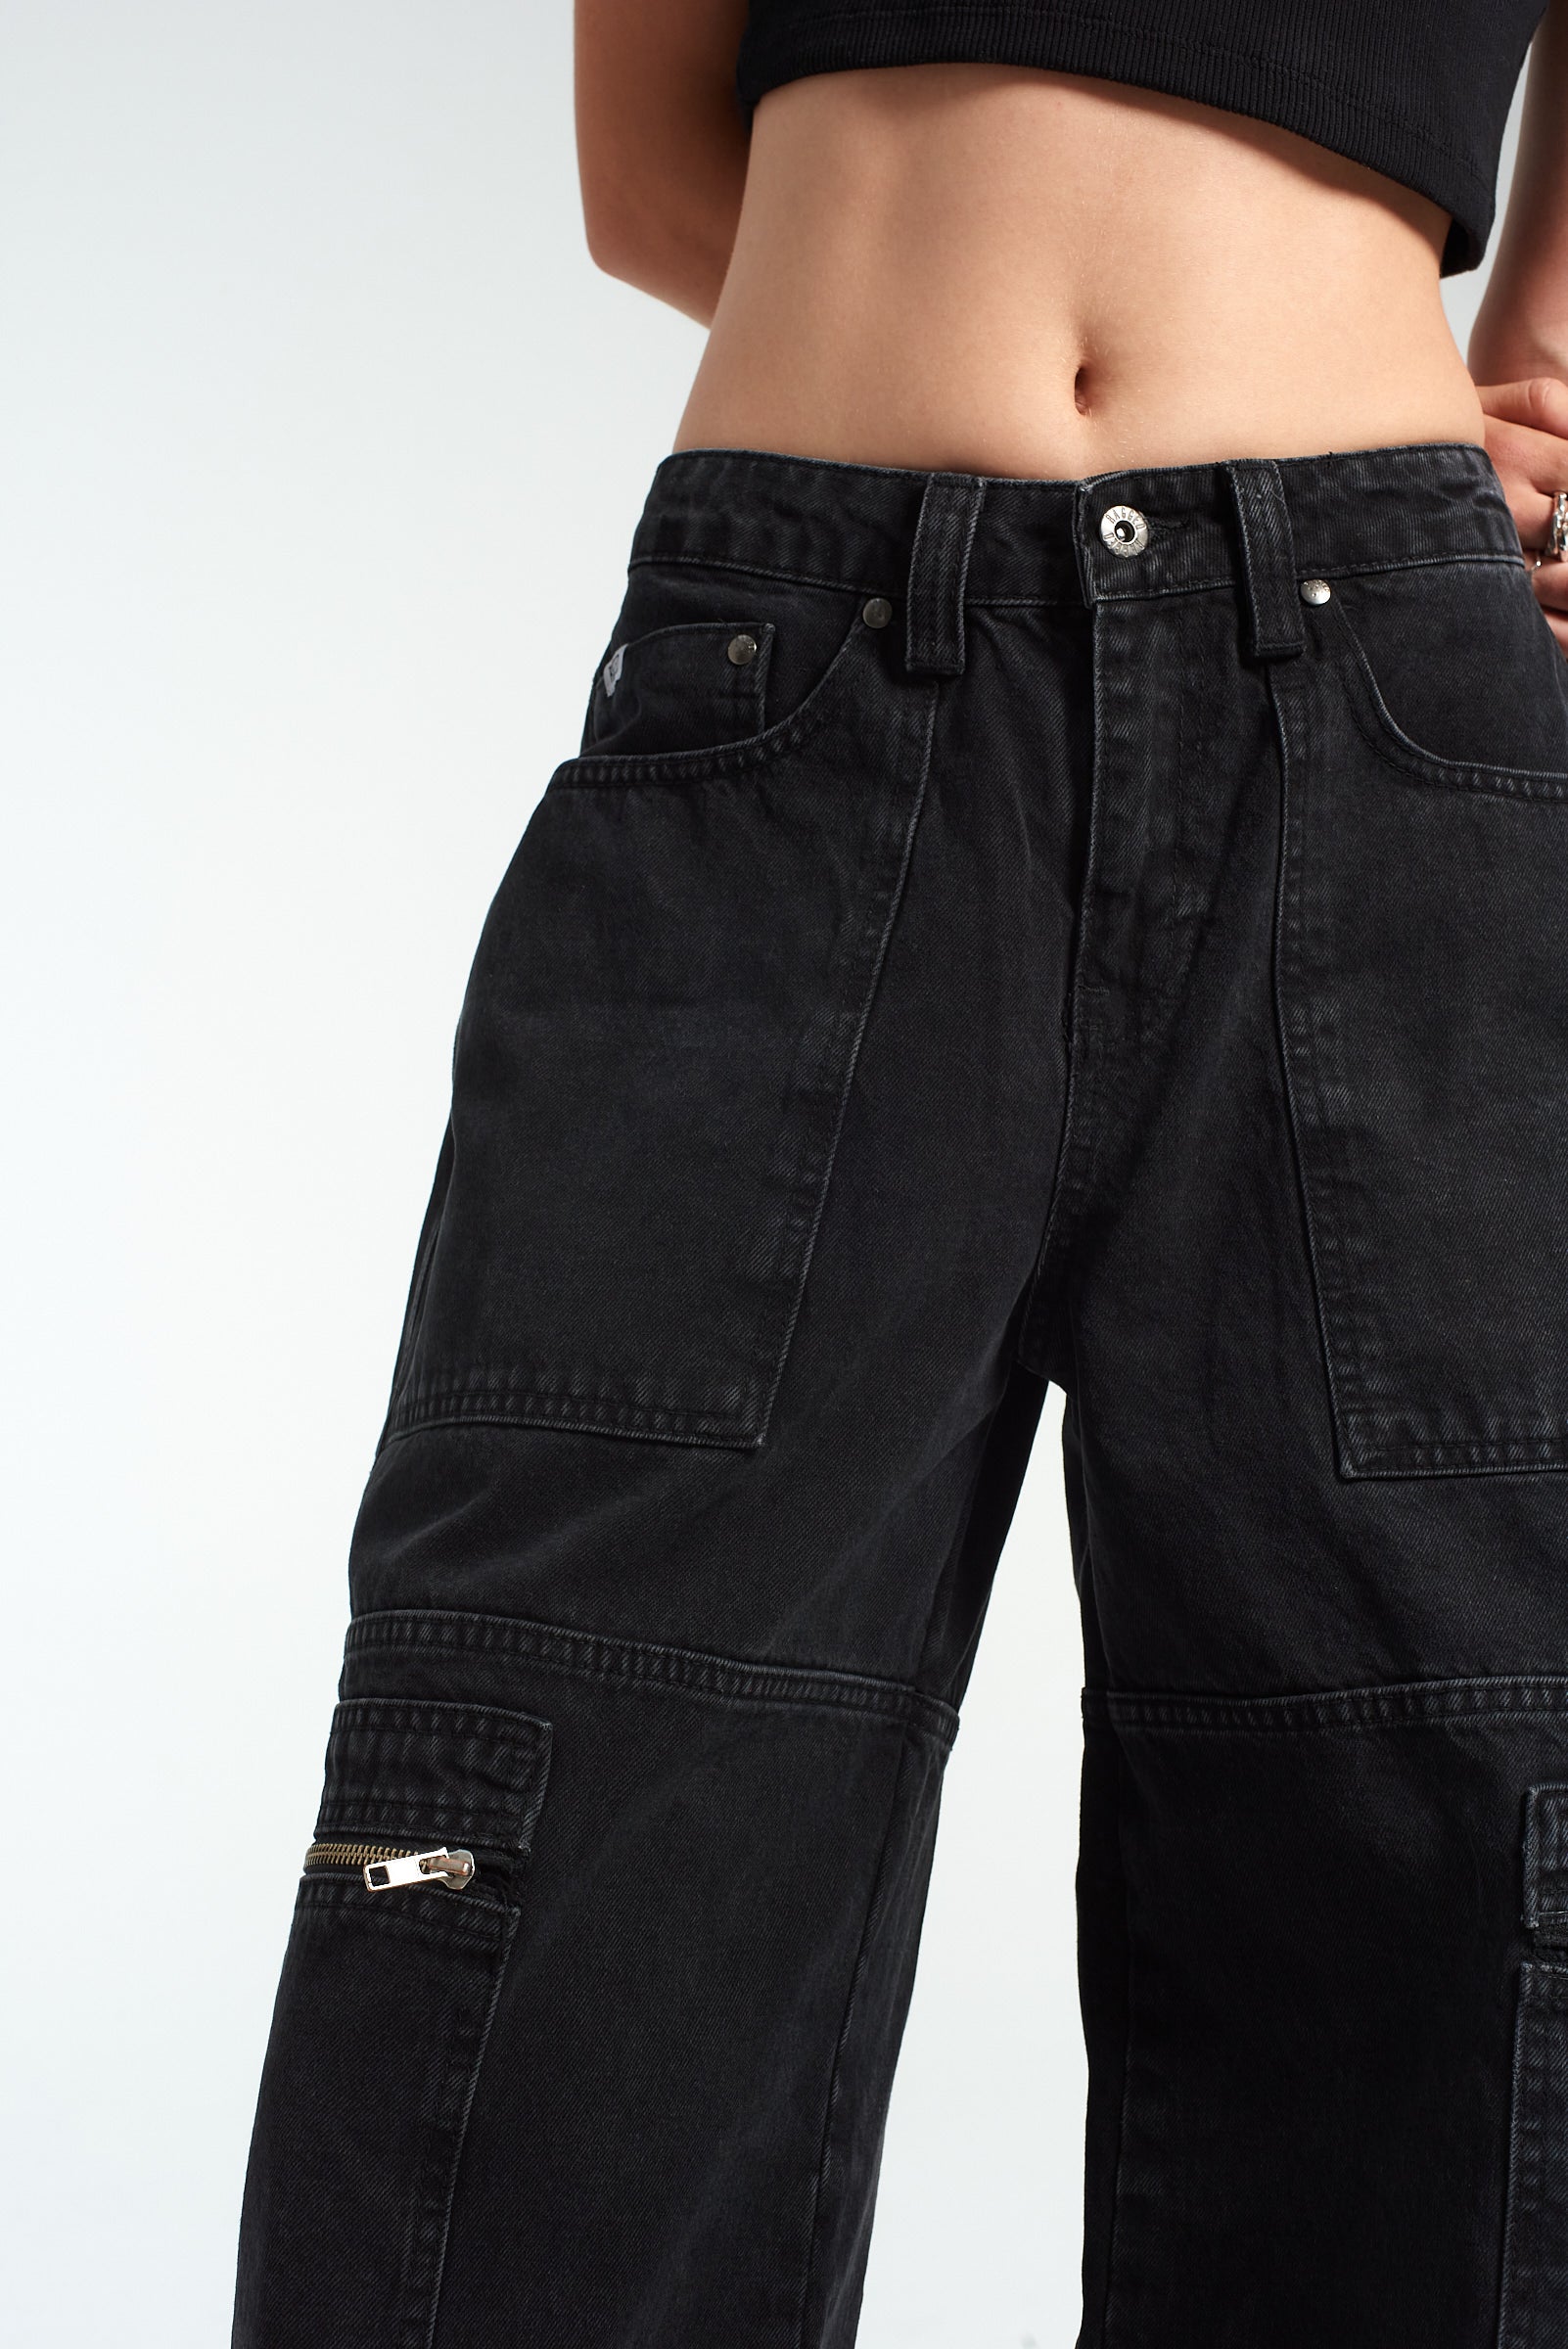 Buy 6 Pocket Cargo Women Jeans (32) Black at